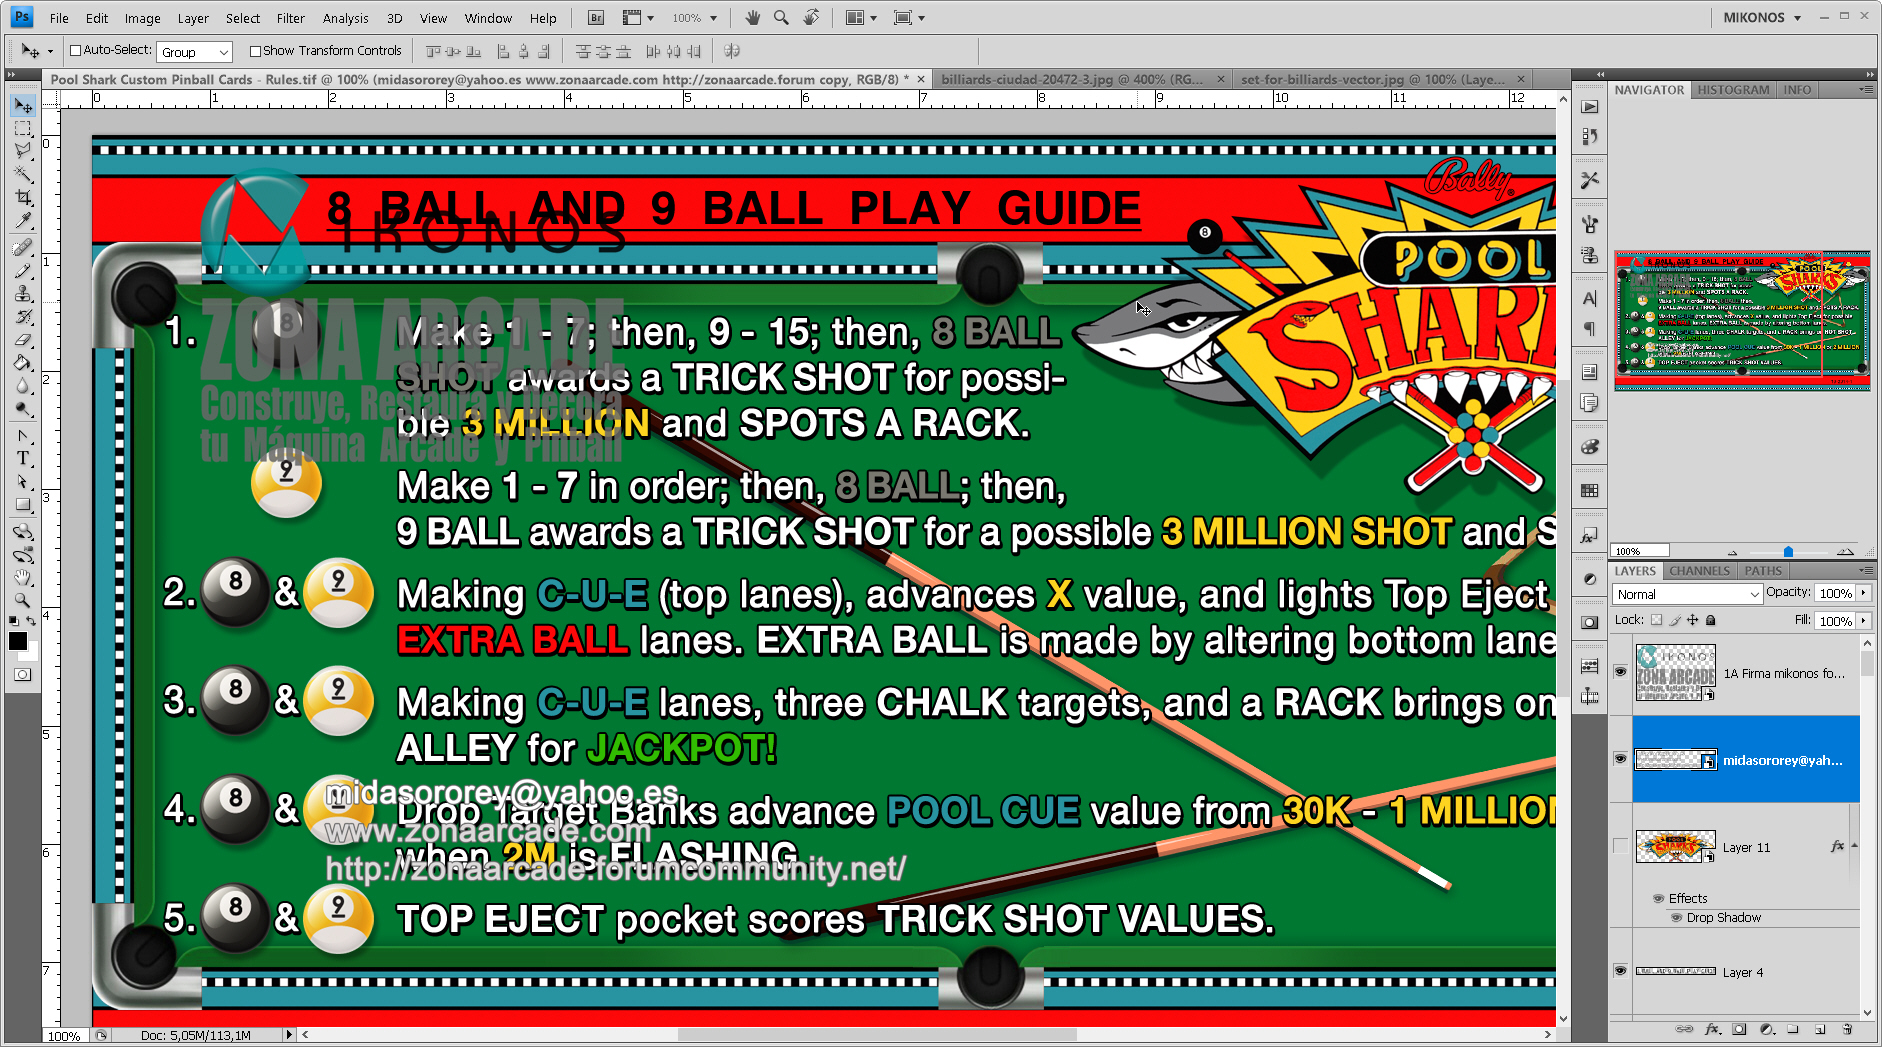 Pool Shark Pinball Card Customized - Rules. Mikonos1